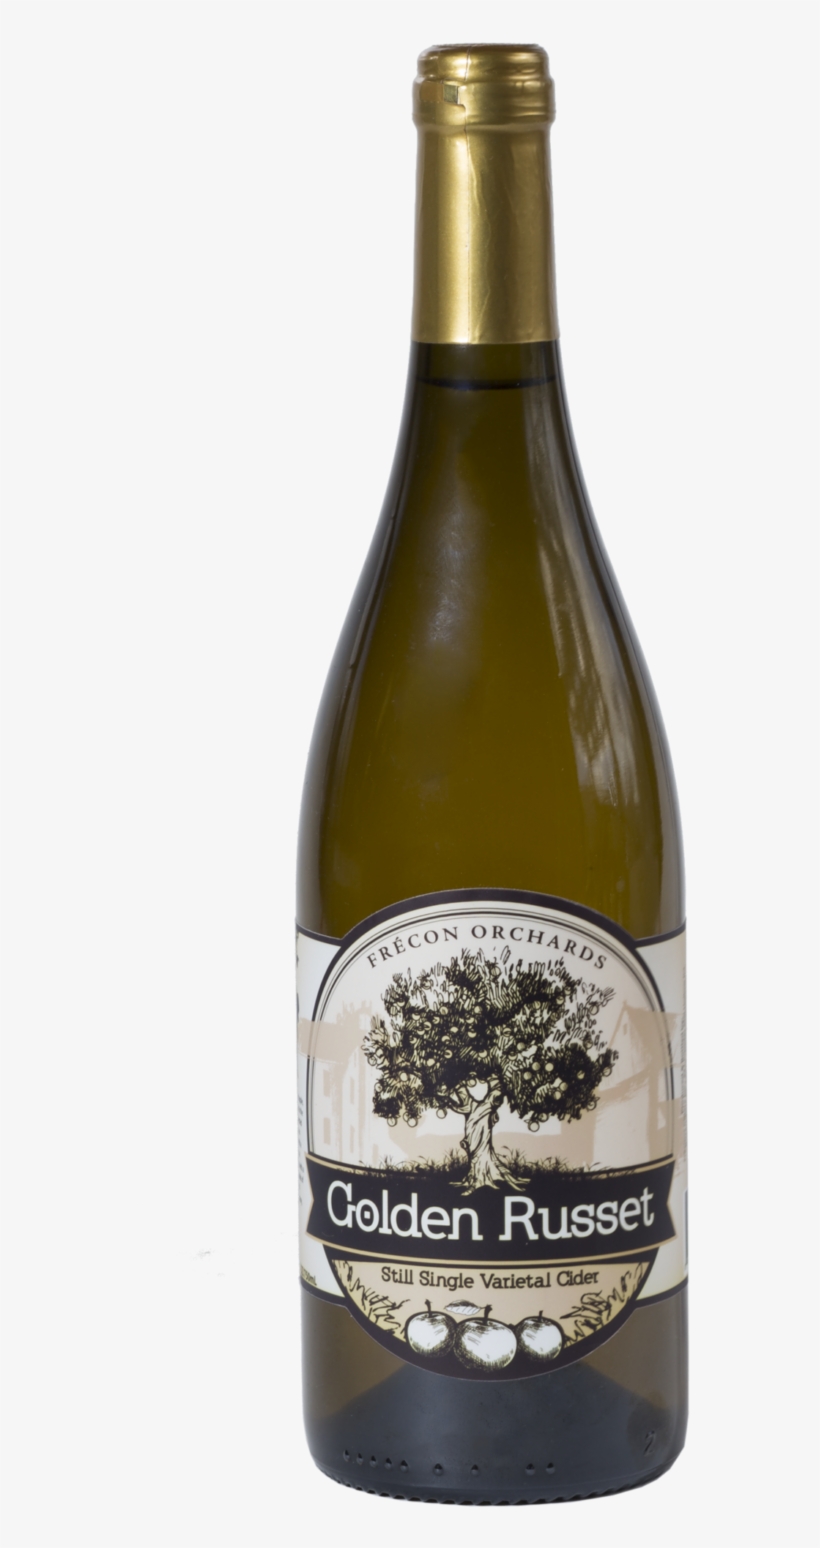 Frecon Orchards Golden Russet Still - Glass Bottle, transparent png #9155142